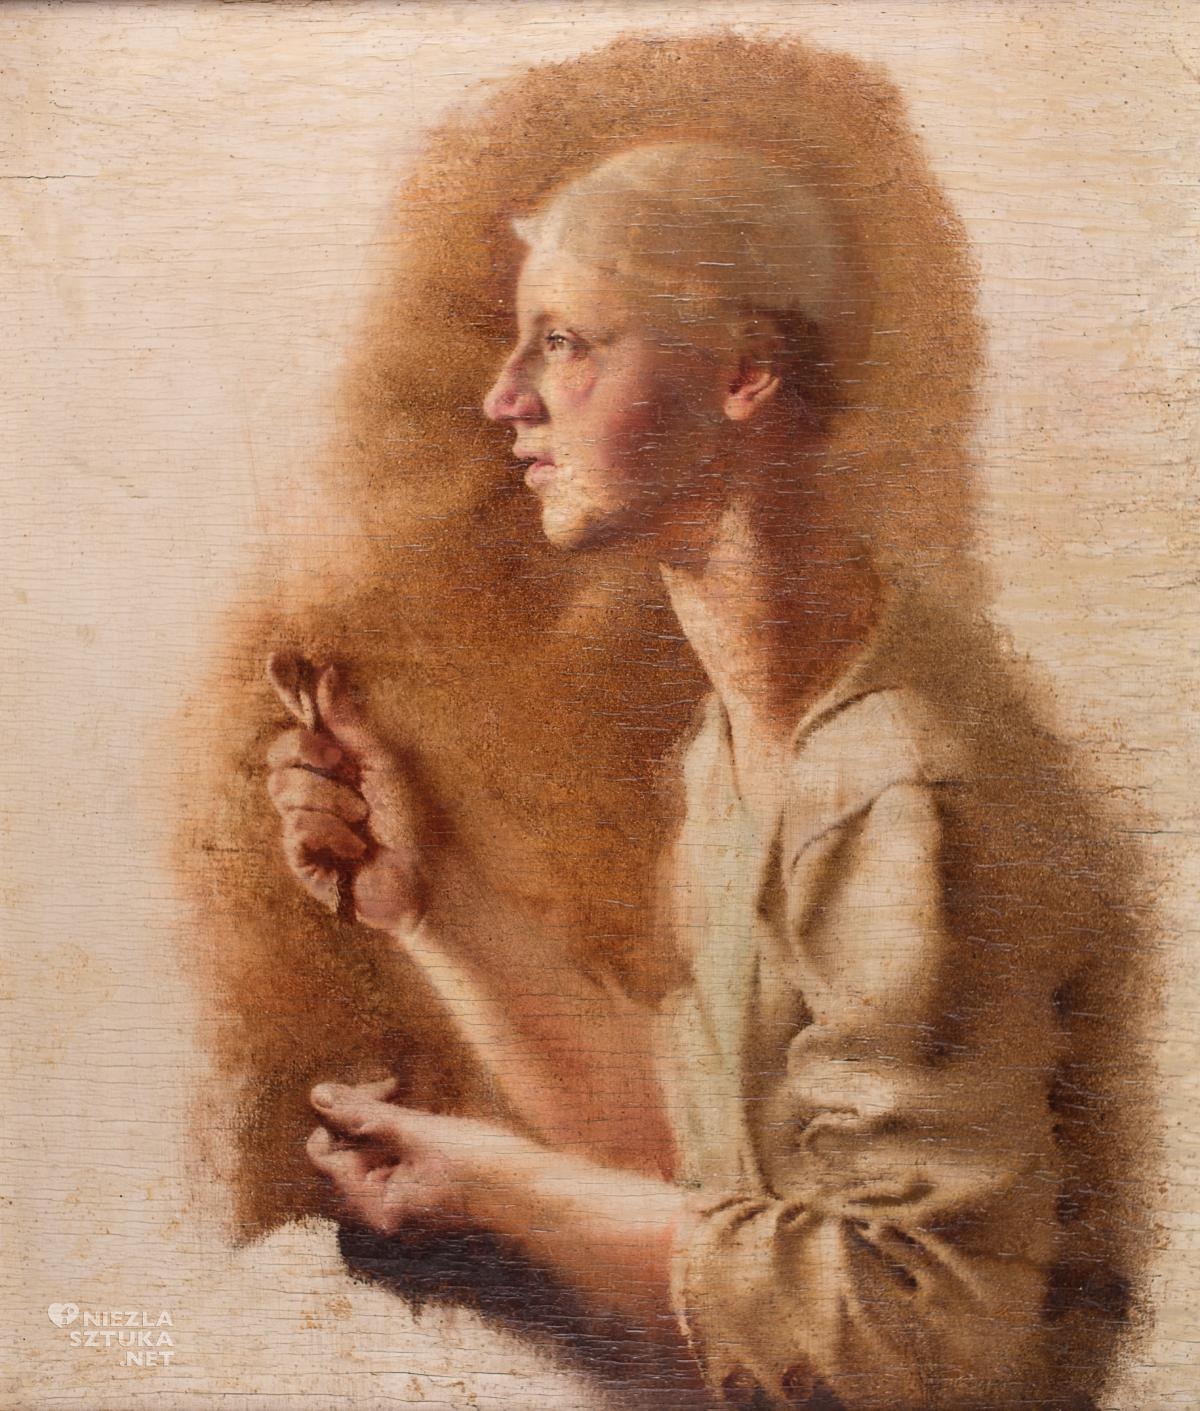 Jan Gotard, Portret chłopca, niezła sztuka